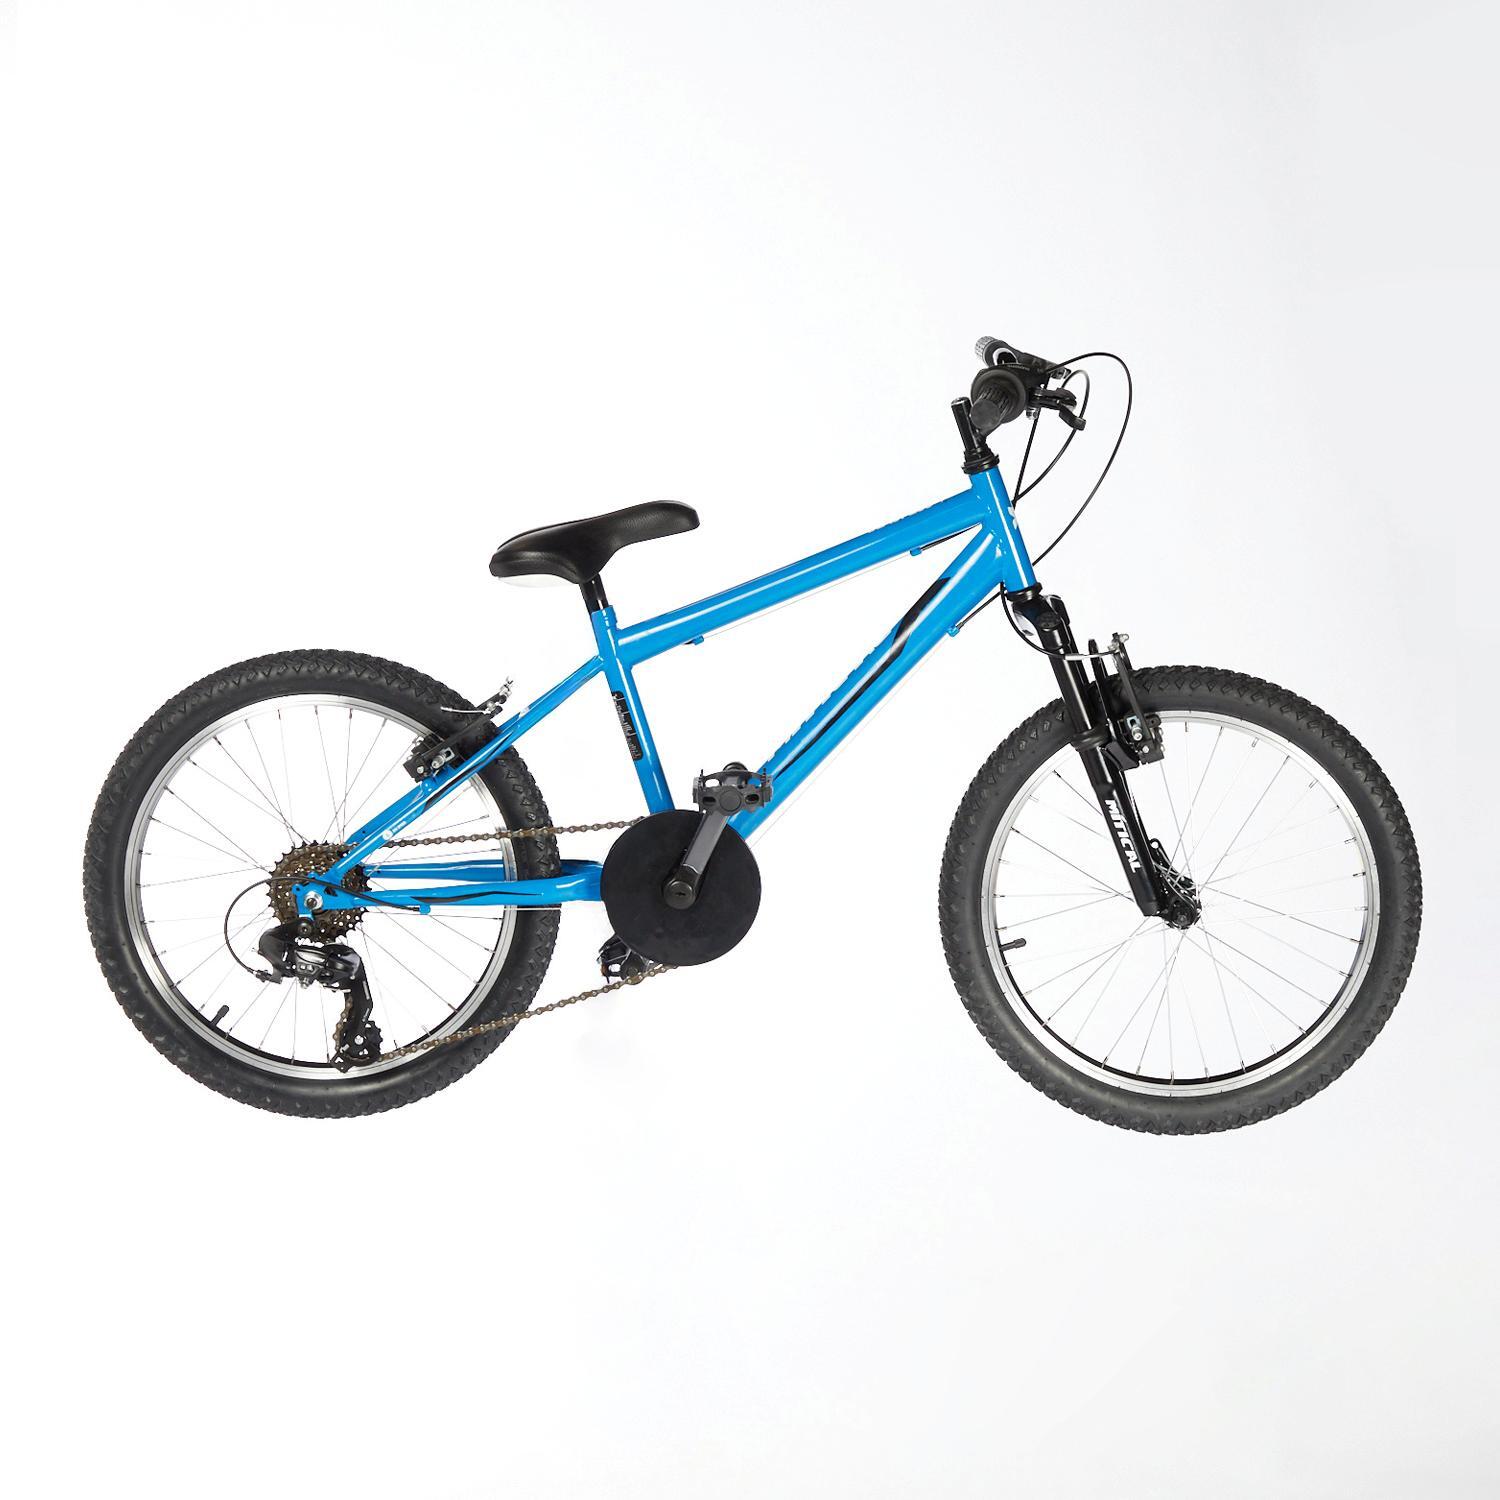 Mítical Blast - Azul - Bicicleta Niños, Sprinter